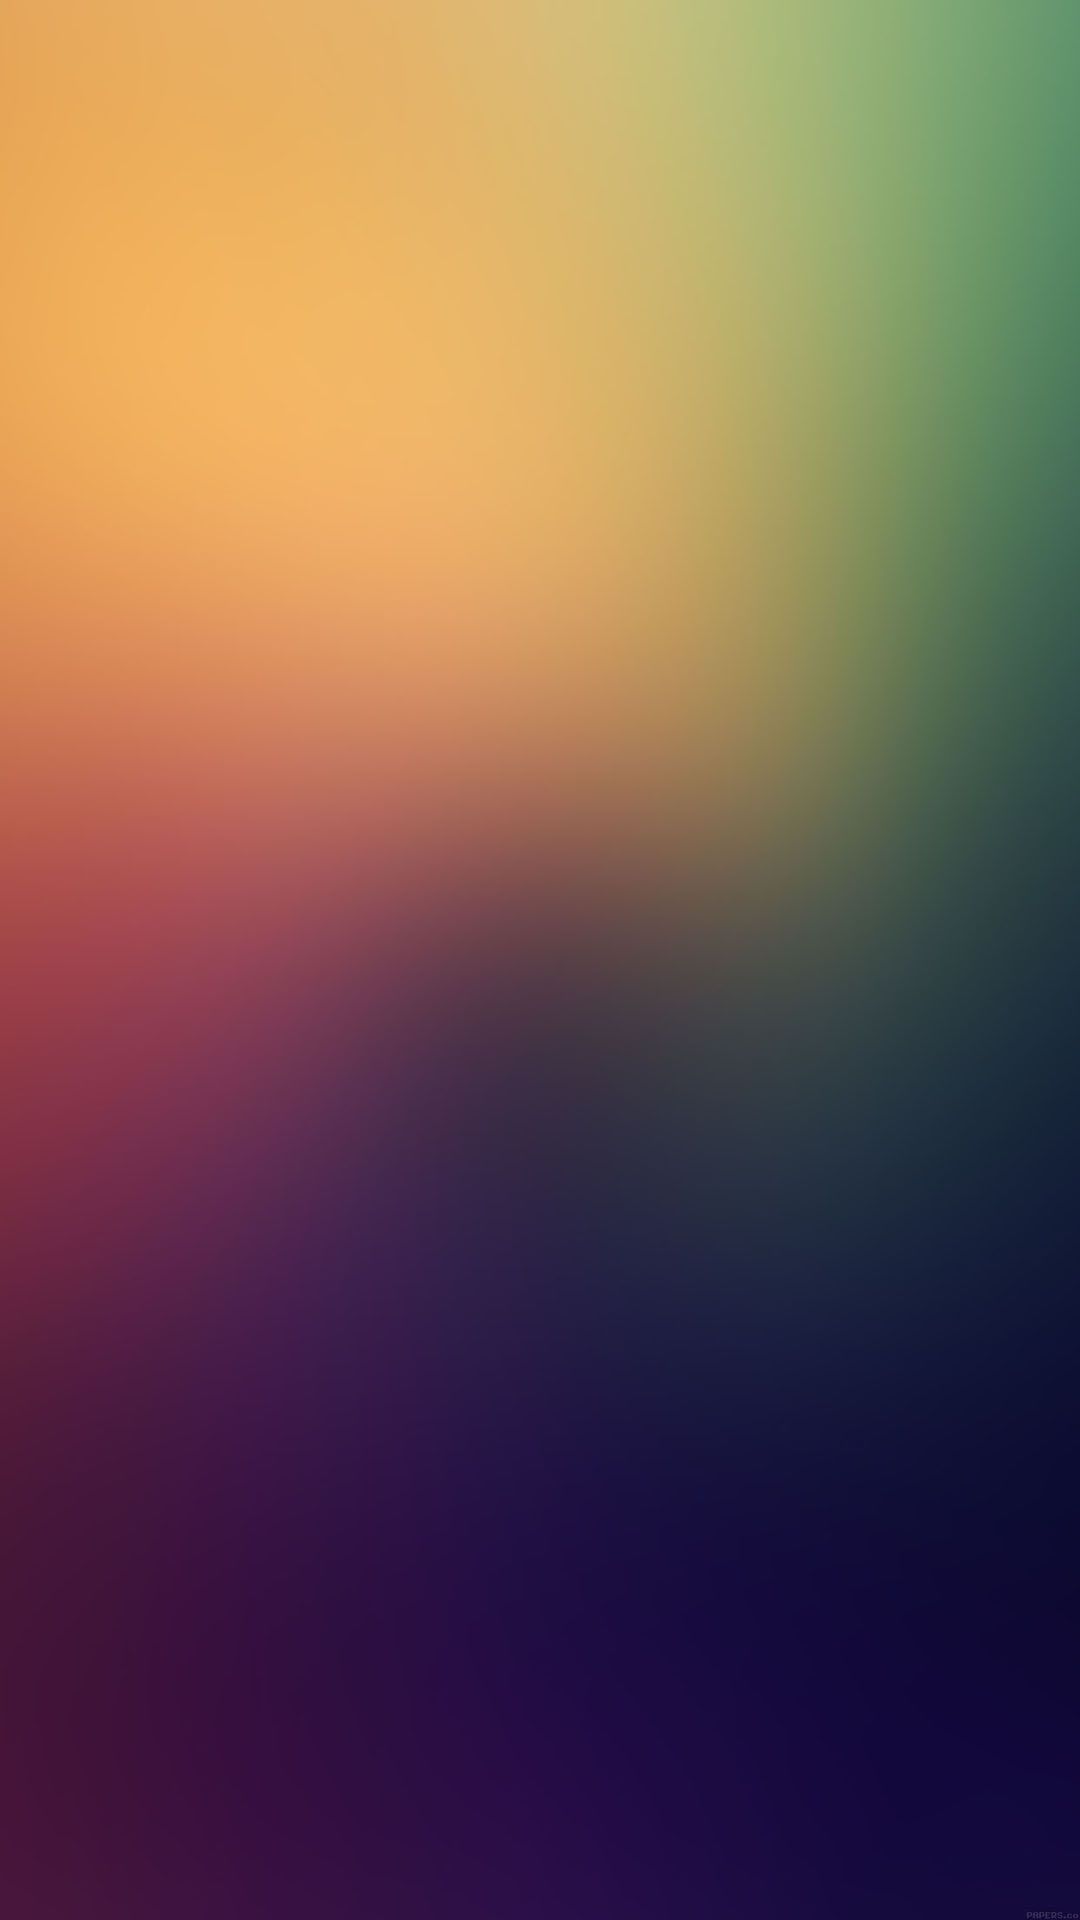 Fondo de desenfoque de color #iPhone # 6 #wallpaper | iPhone 6 ~ 8 Fondos de pantalla